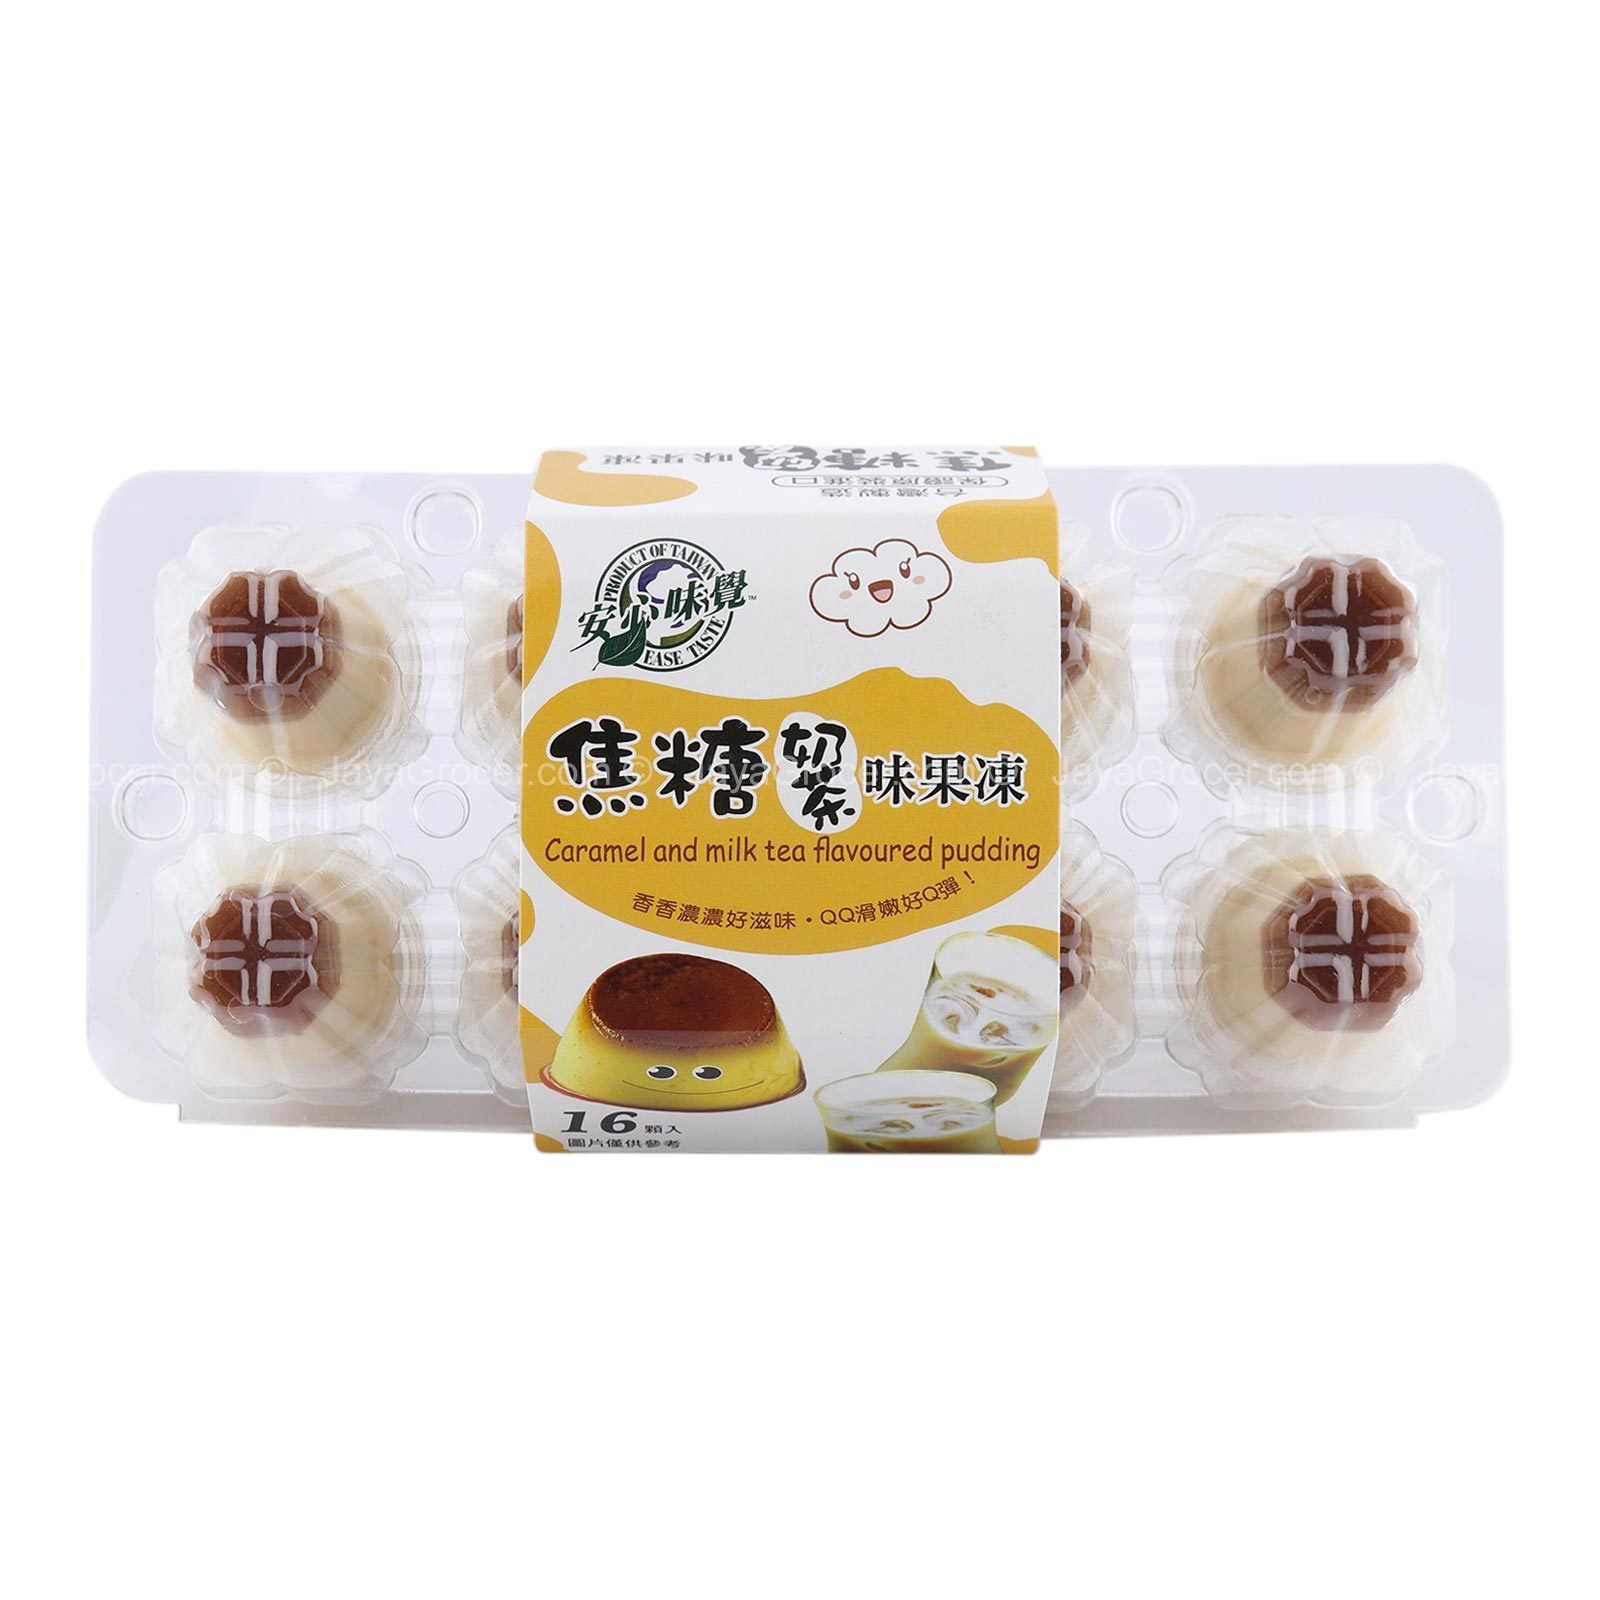 Taiwan Ease Taste Pudding Jelly - Caramel & Milk Tea  台湾 安心味觉 鸡蛋布丁 果冻 - 焦糖奶茶